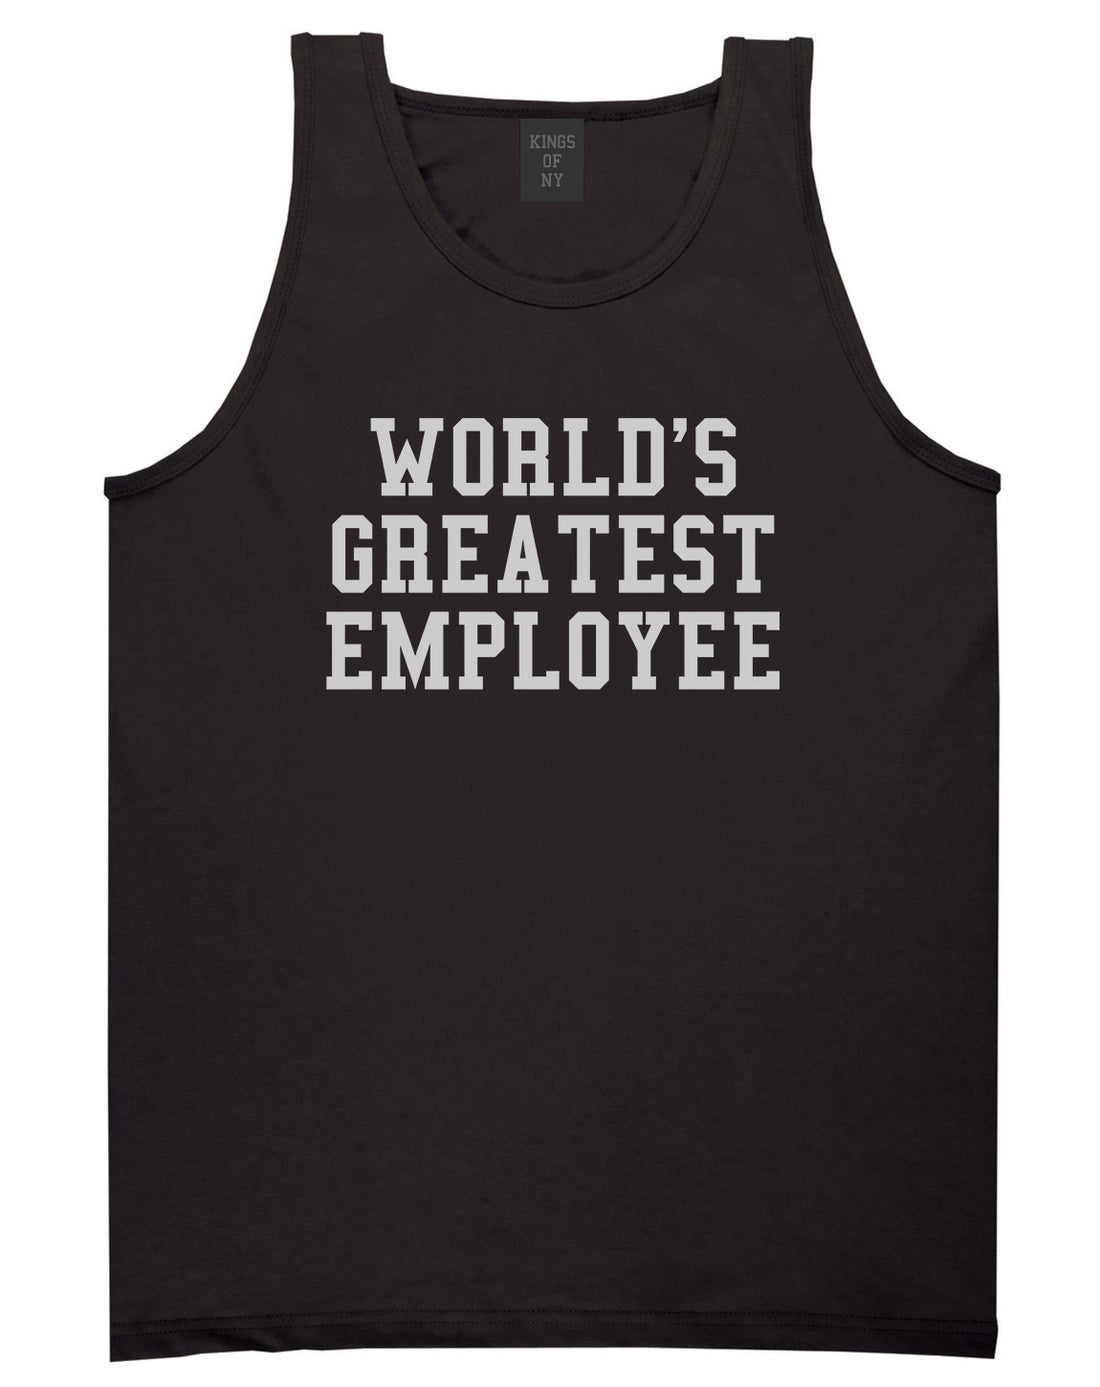 Worlds Greatest Employee Funny Christmas Mens Tank Top T-Shirt Black